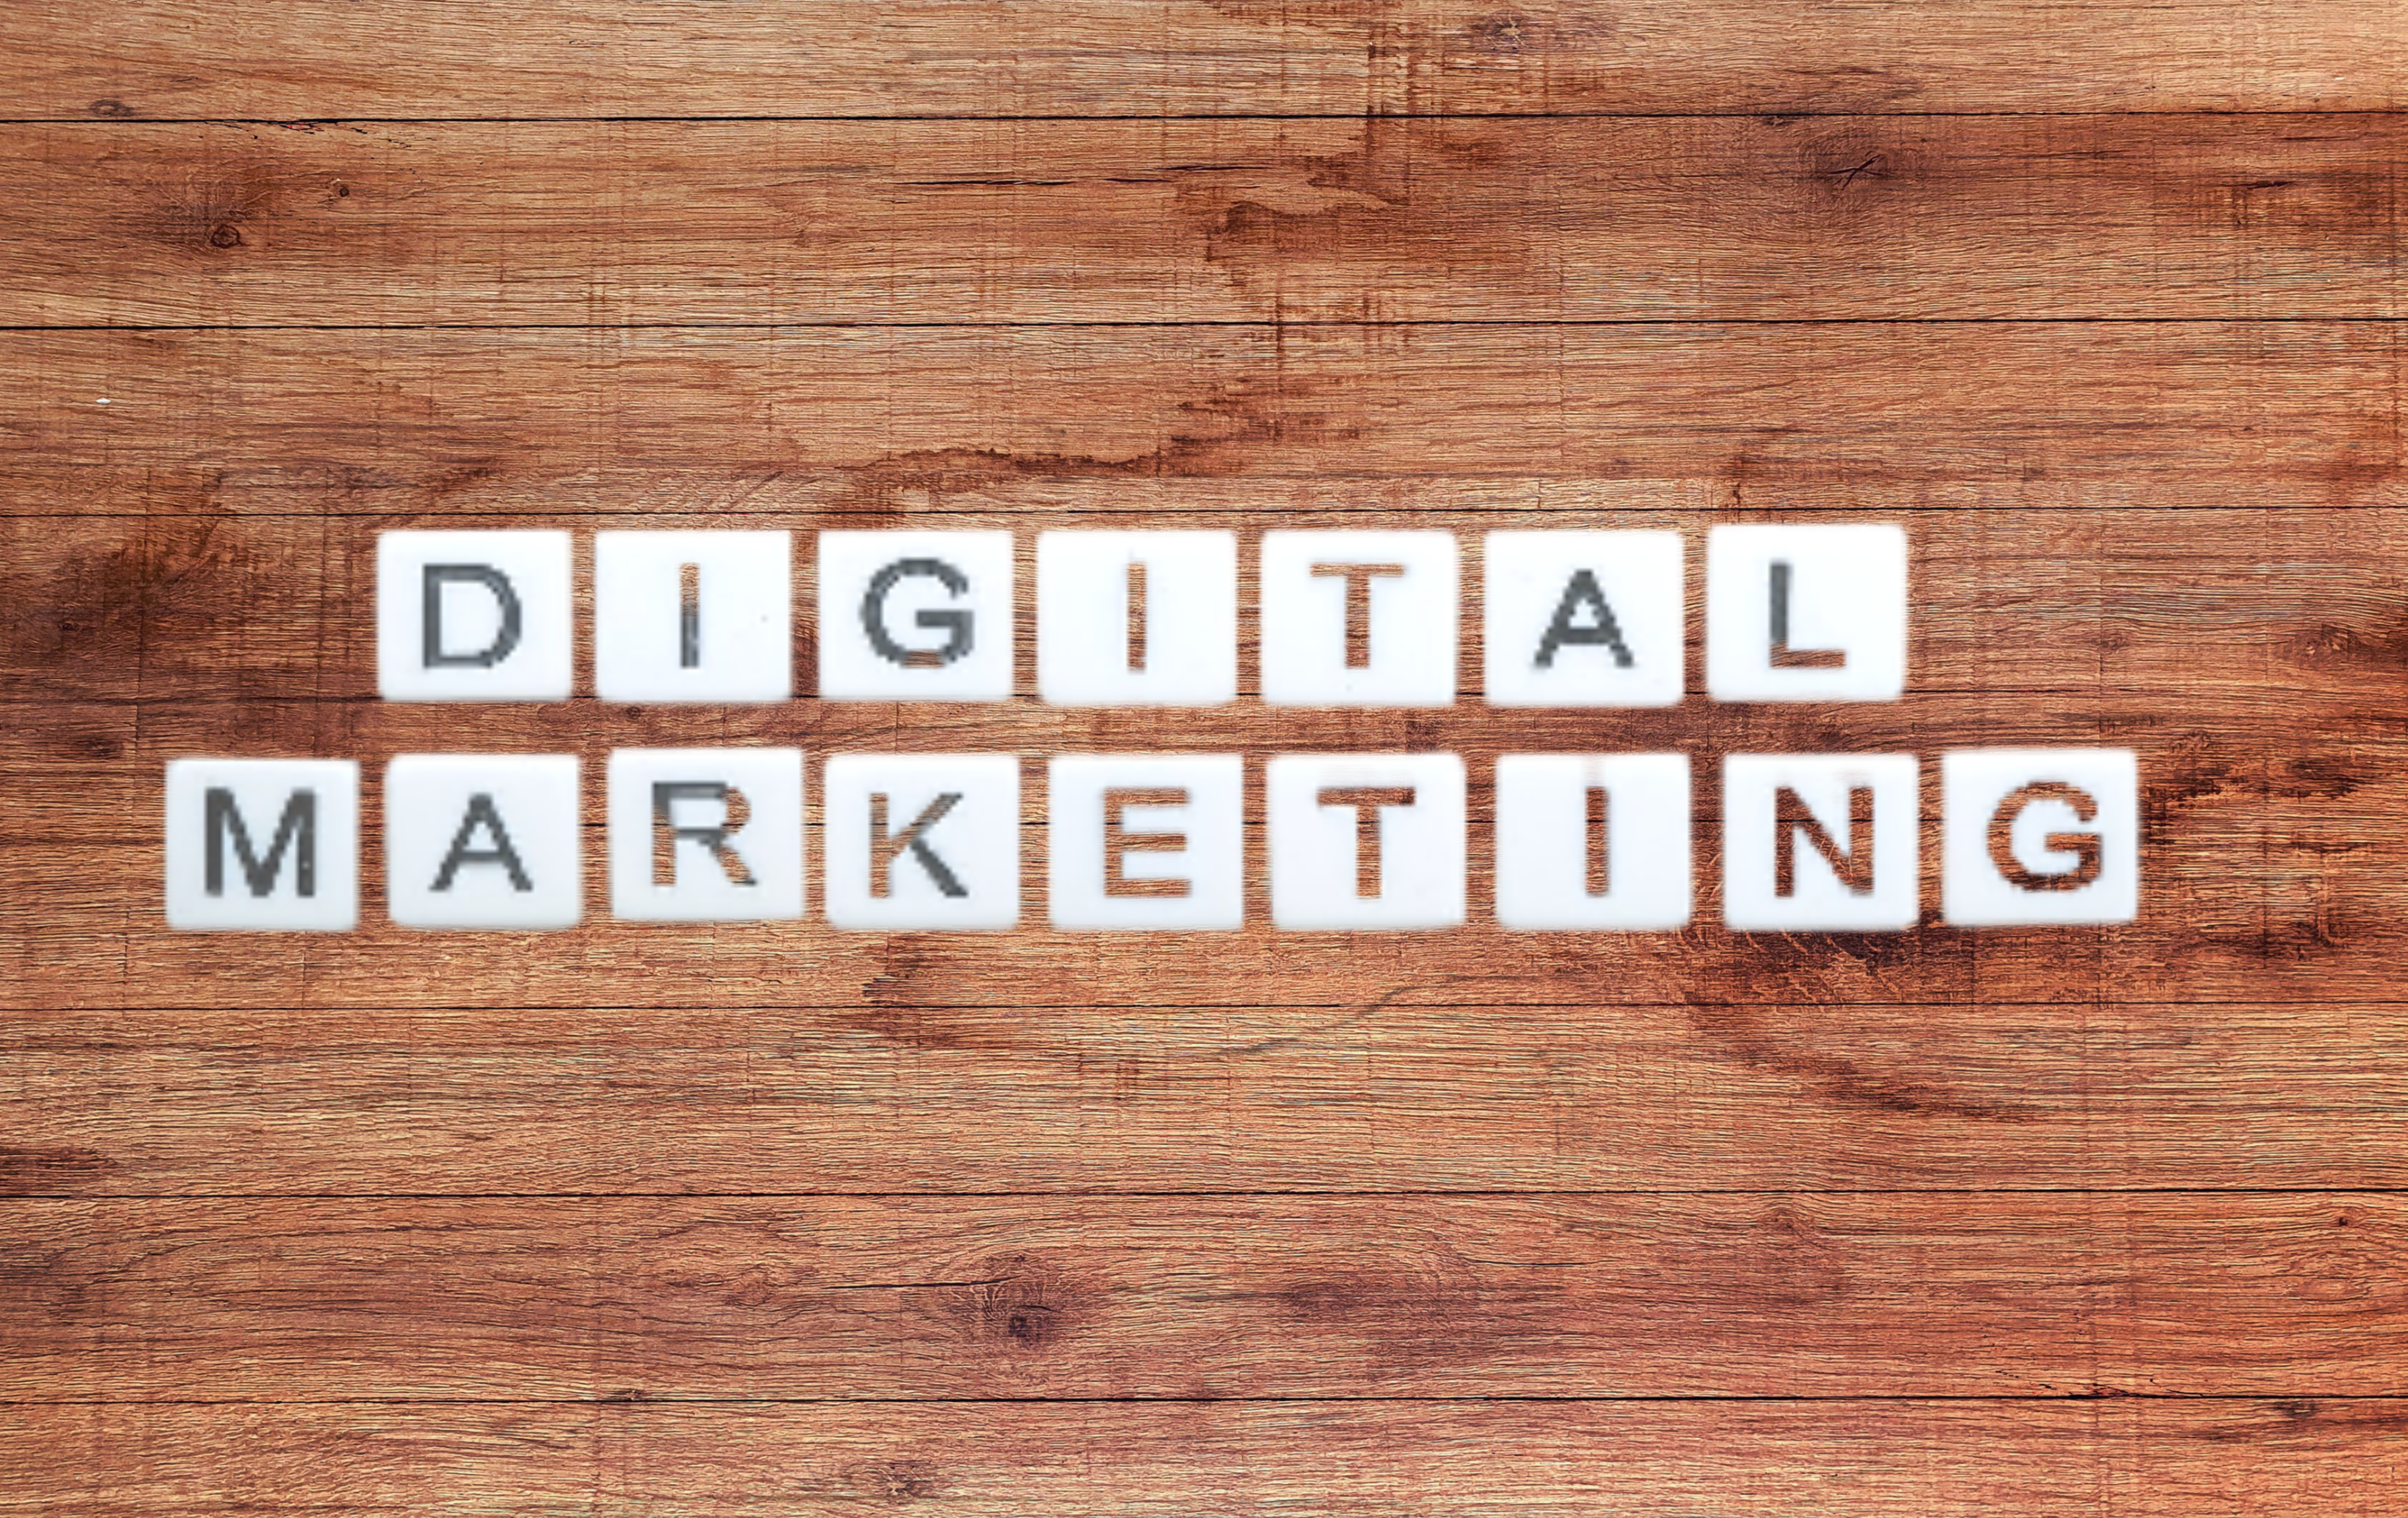 The New ERA of Digital Marketing